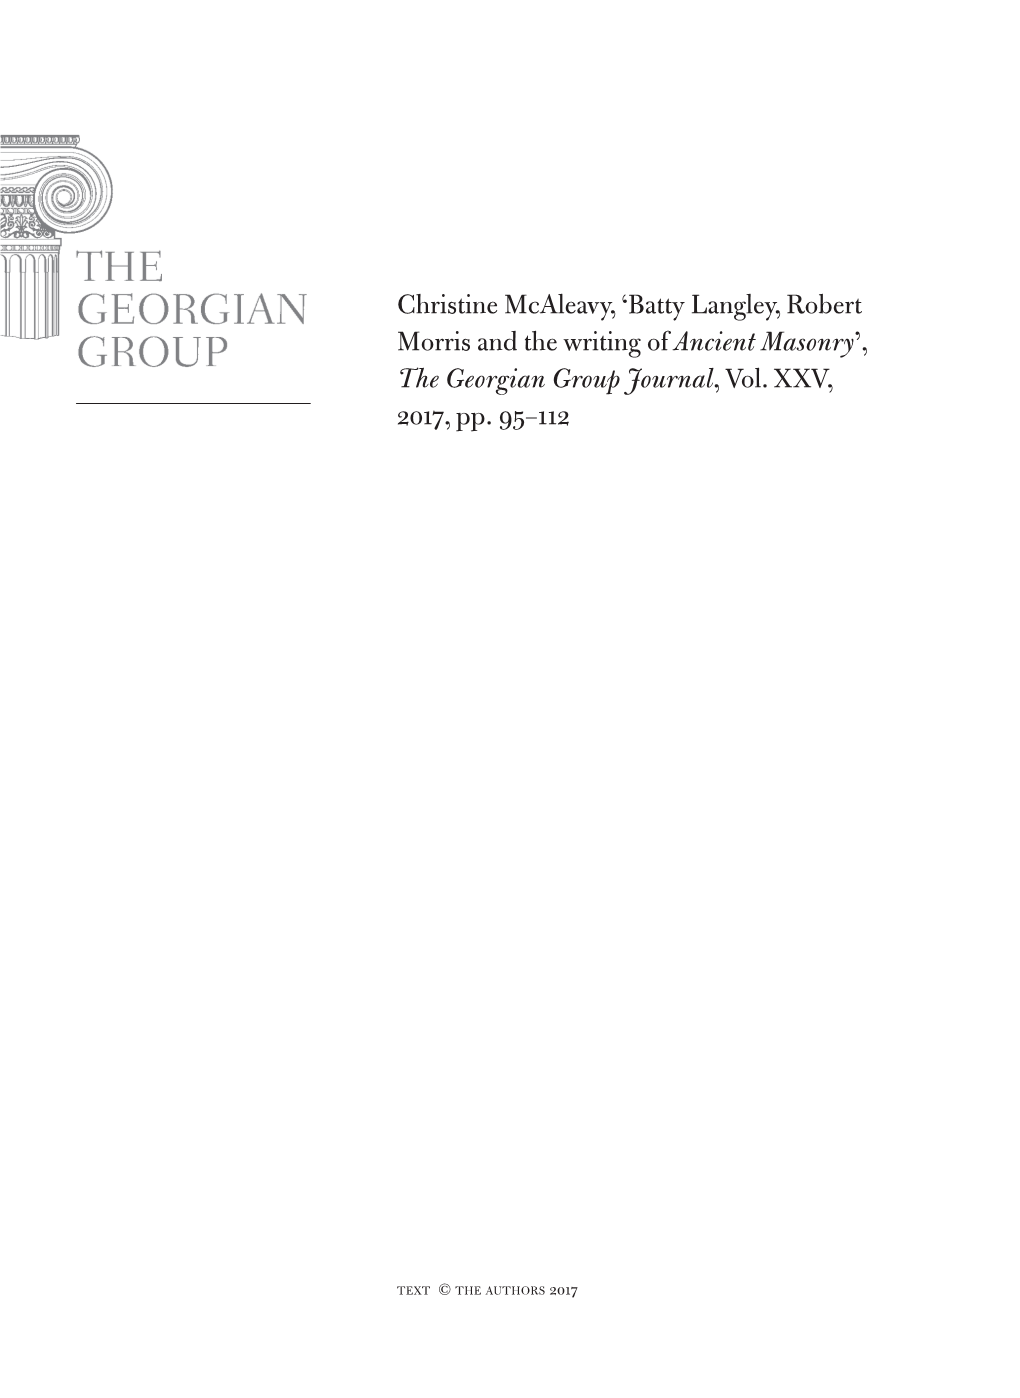 Christine Mcaleavy, 'Batty Langley, Robert Morris and the Writing of Ancient Masonry', the Georgian Group Journal, Vol. Xxv